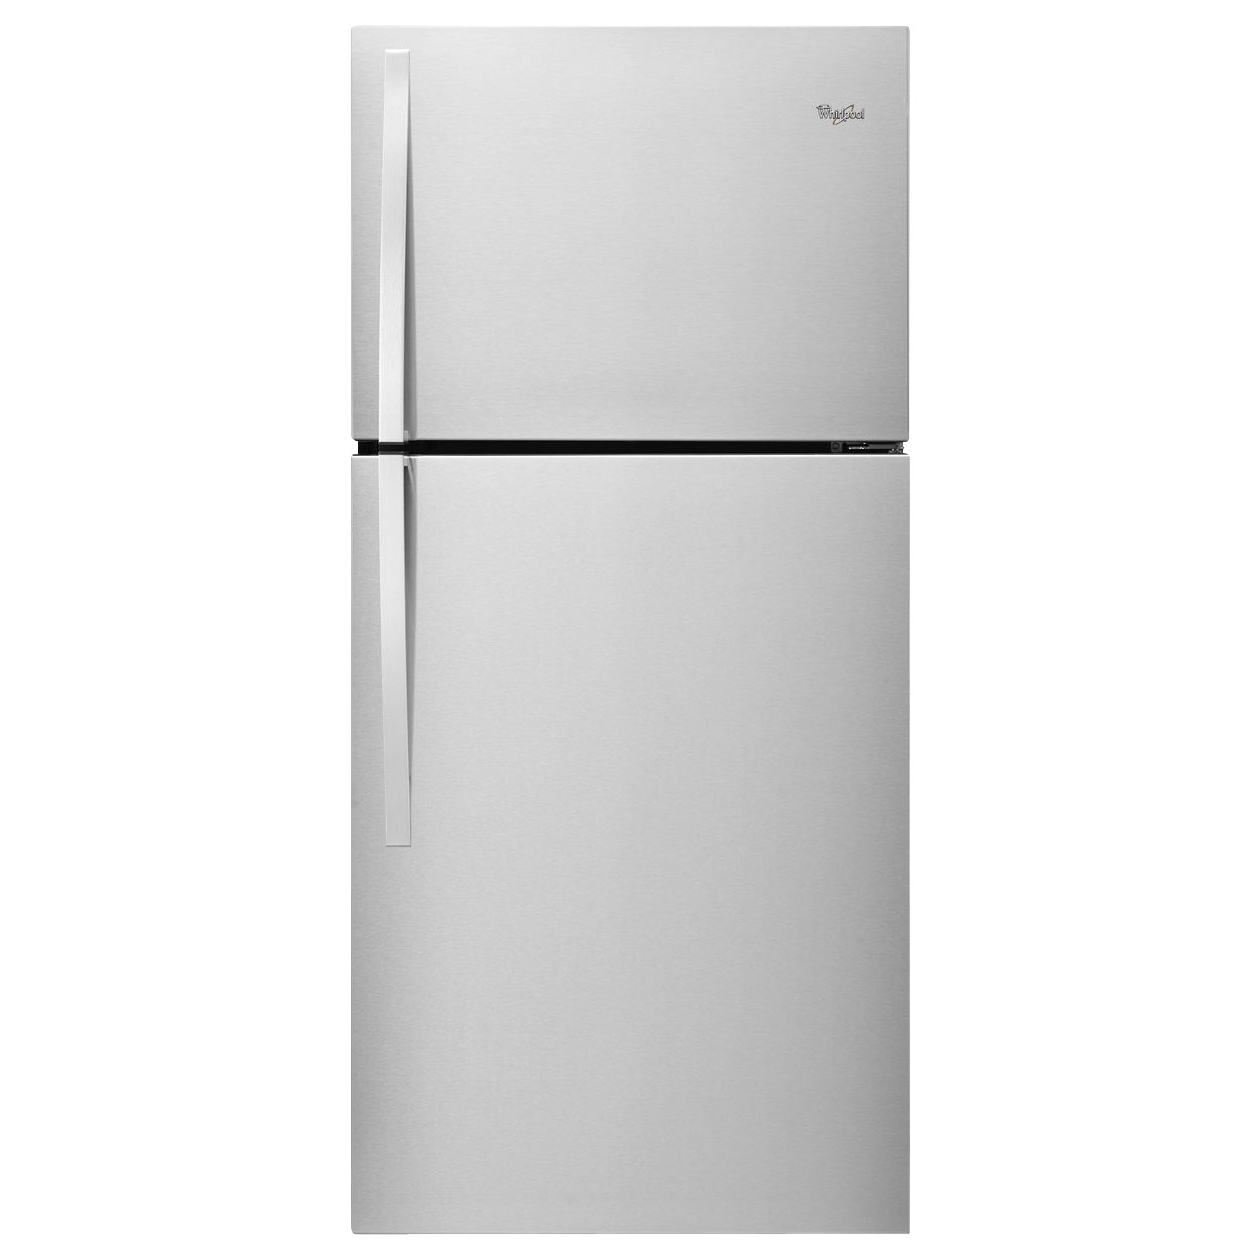 Buy Whirlpool Refrigerator WRT519SZDM